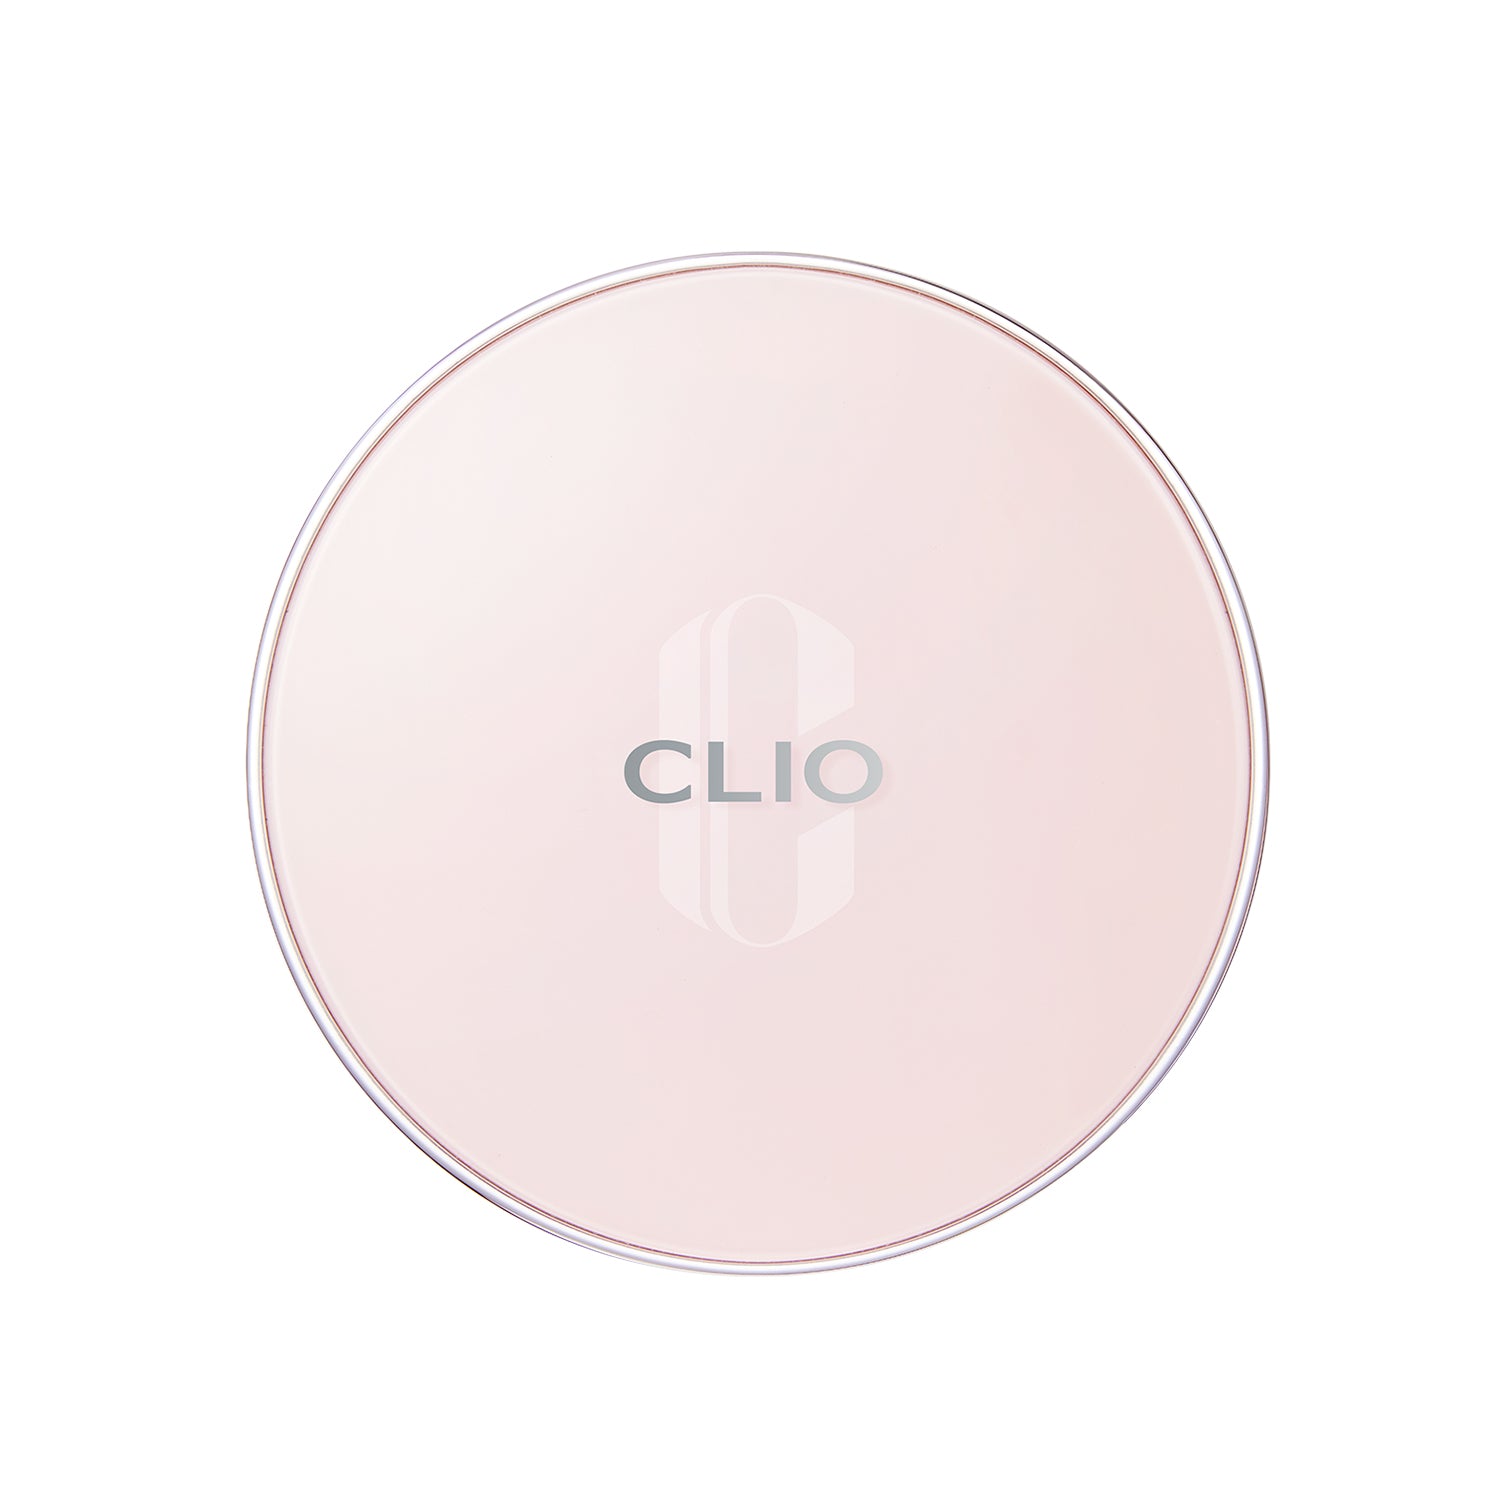 [CLIO] Stay Perfect Tone Up Cushion - CLUB CLIO